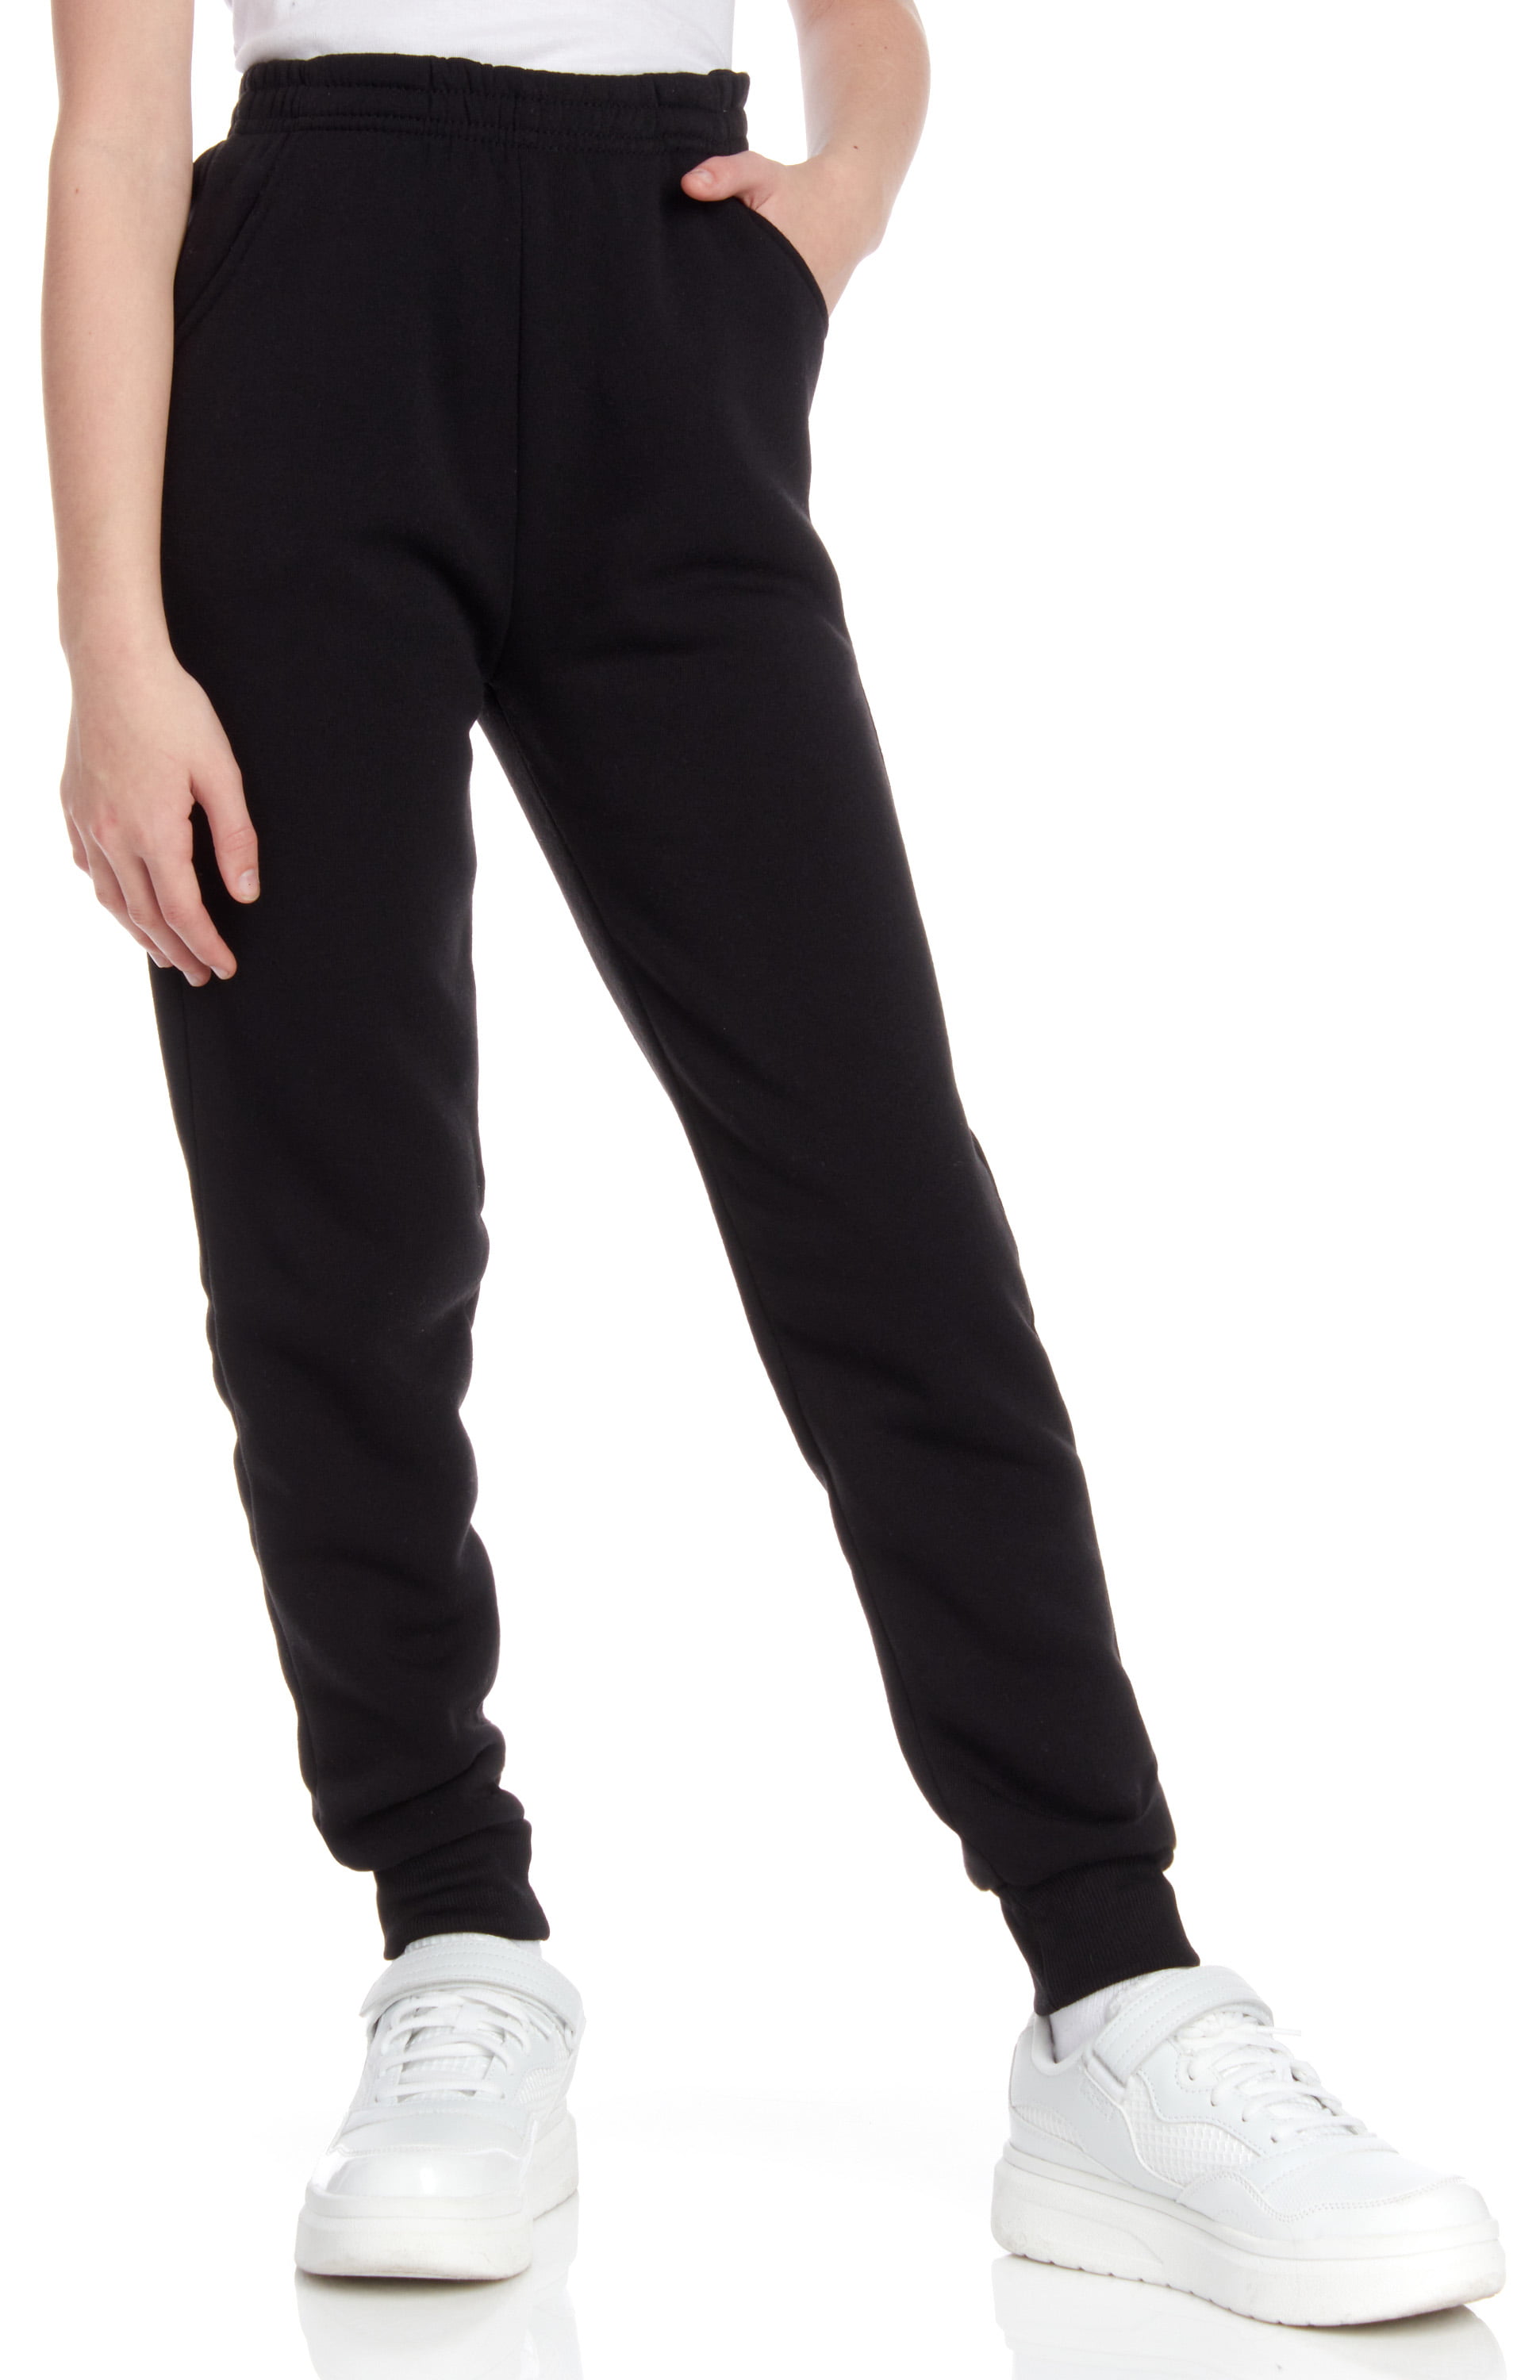 Coney Island Girls' Sweatpants – 3 Pack Active Fleece Joggers (Size: 7-16)  